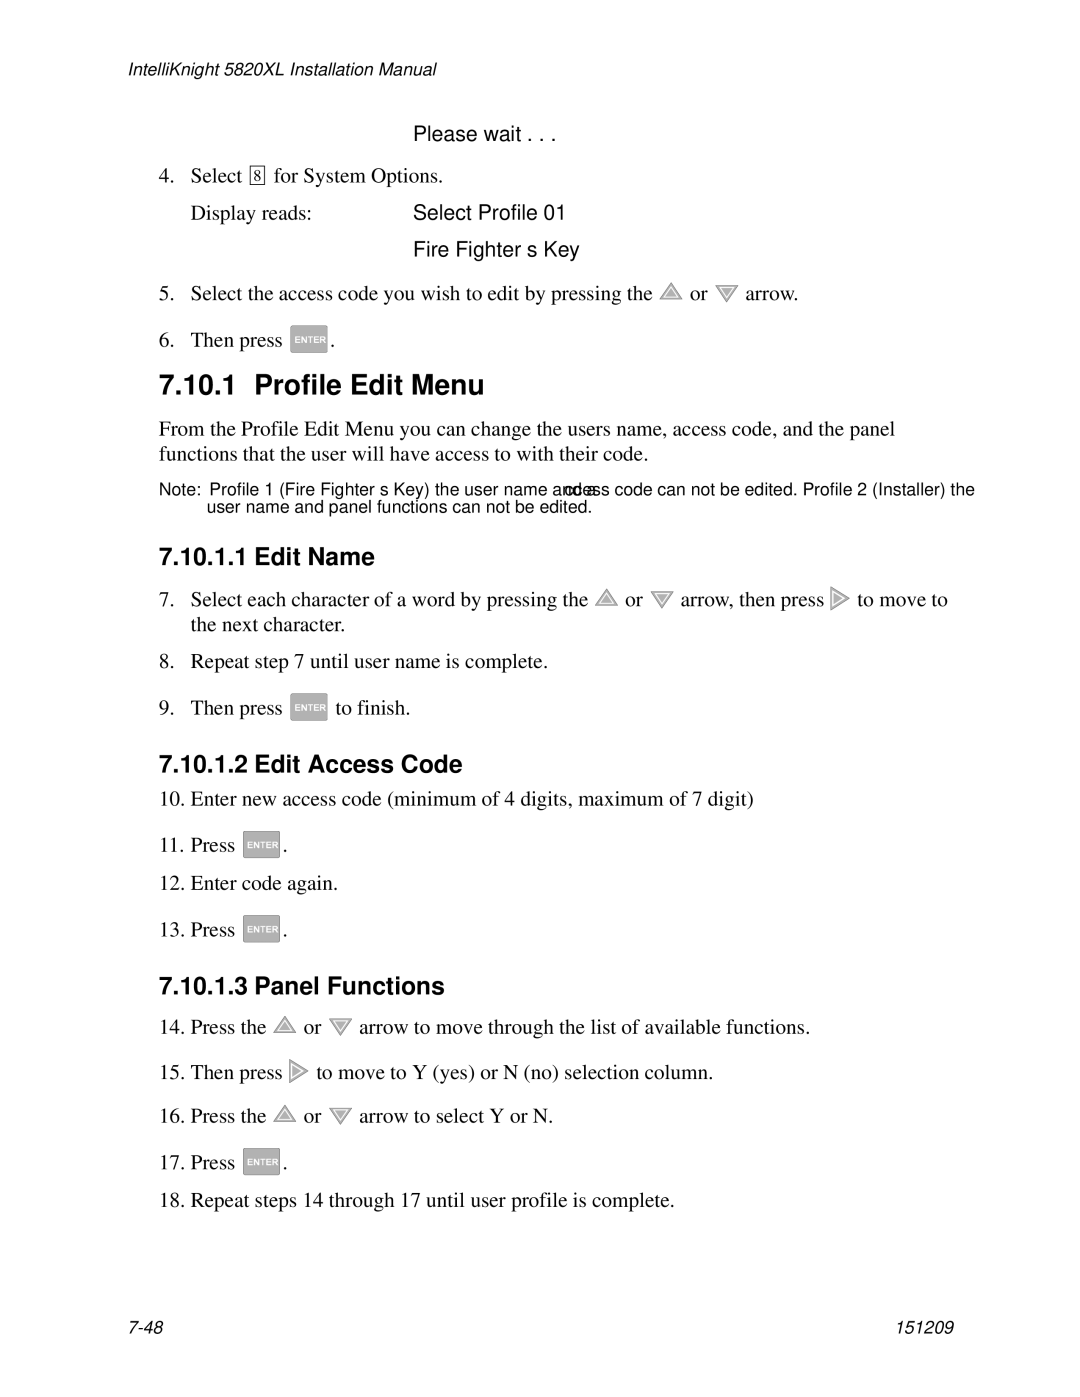 Honeywell 5820XL manual Profile Edit Menu, Edit Name, Edit Access Code, Panel Functions 